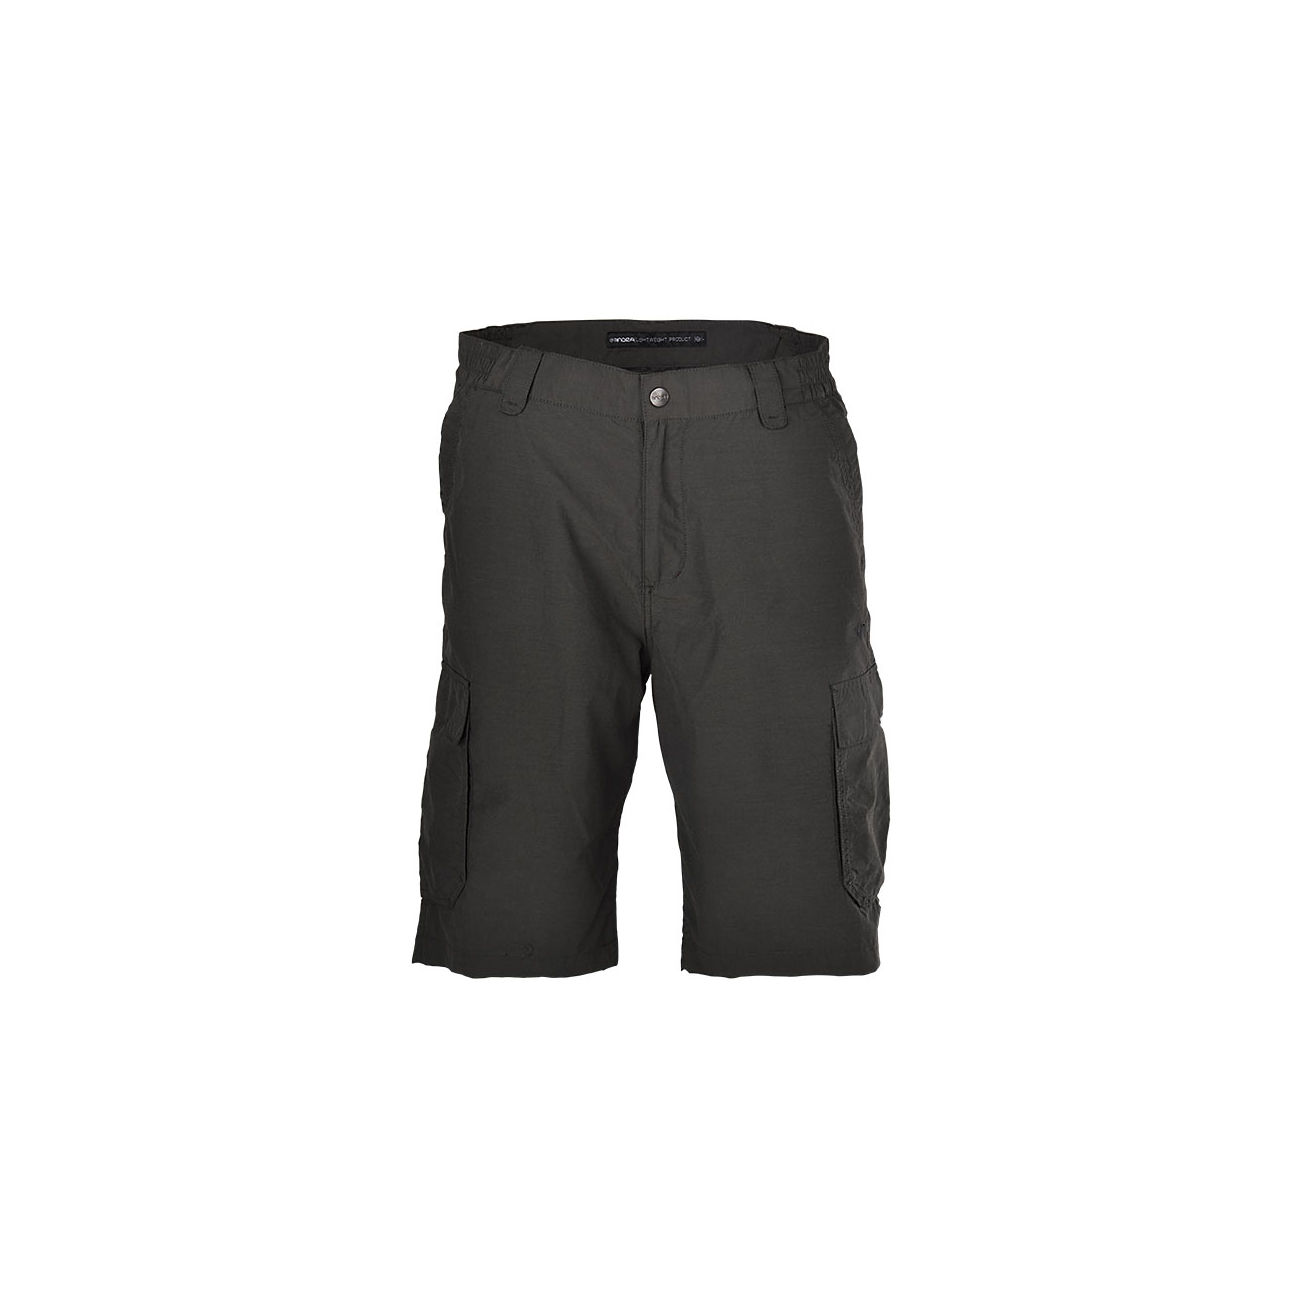 Tindra Eiger Men's Shorts, Dock